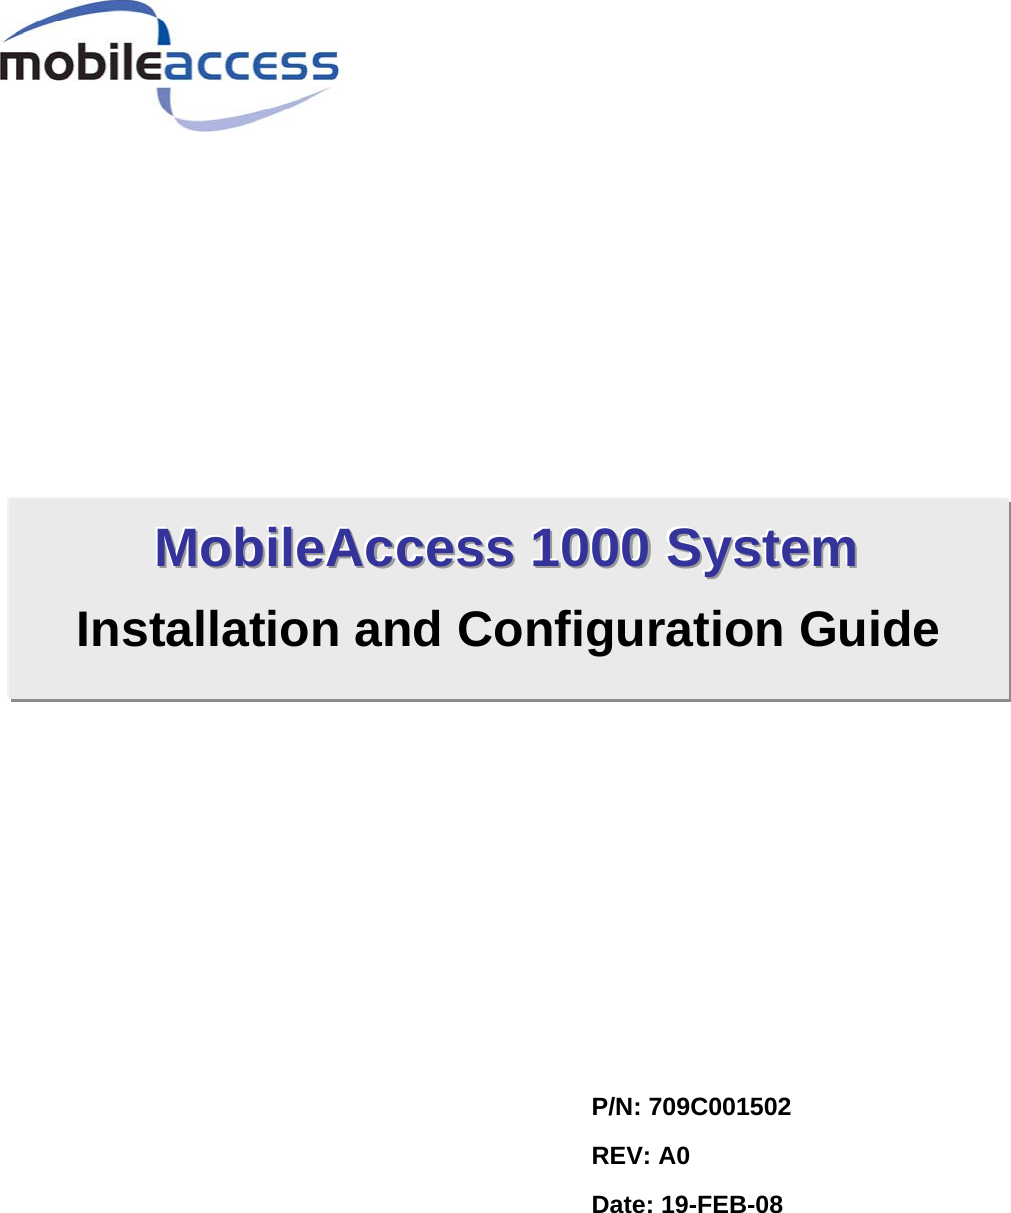                                            P/N: 709C001502 REV: A0 Date: 19-FEB-08 MMMooobbbiiillleeeAAAcccccceeessssss   111000000000   SSSyyysssttteeemmm   Installation and Configuration Guide   